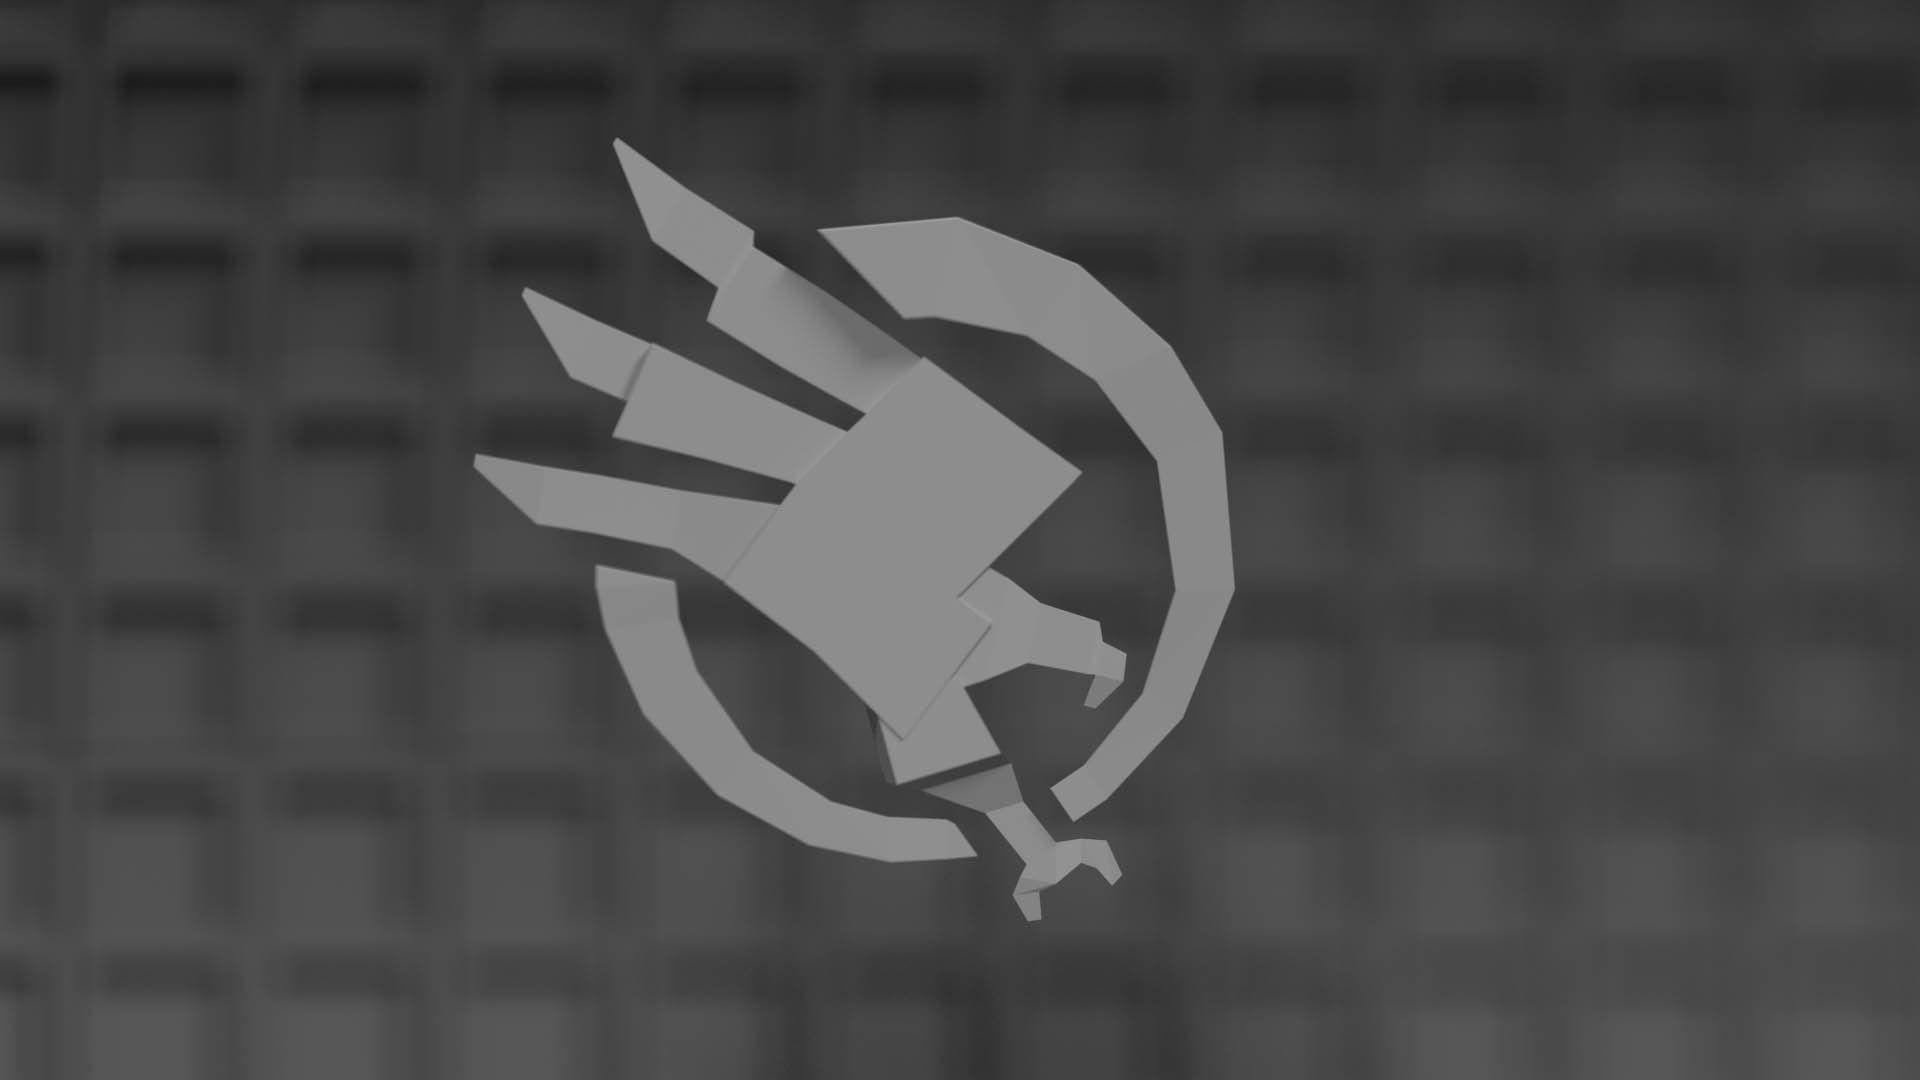 SpeedArt. Command And Conquer 3 GDI Logo [Blender]